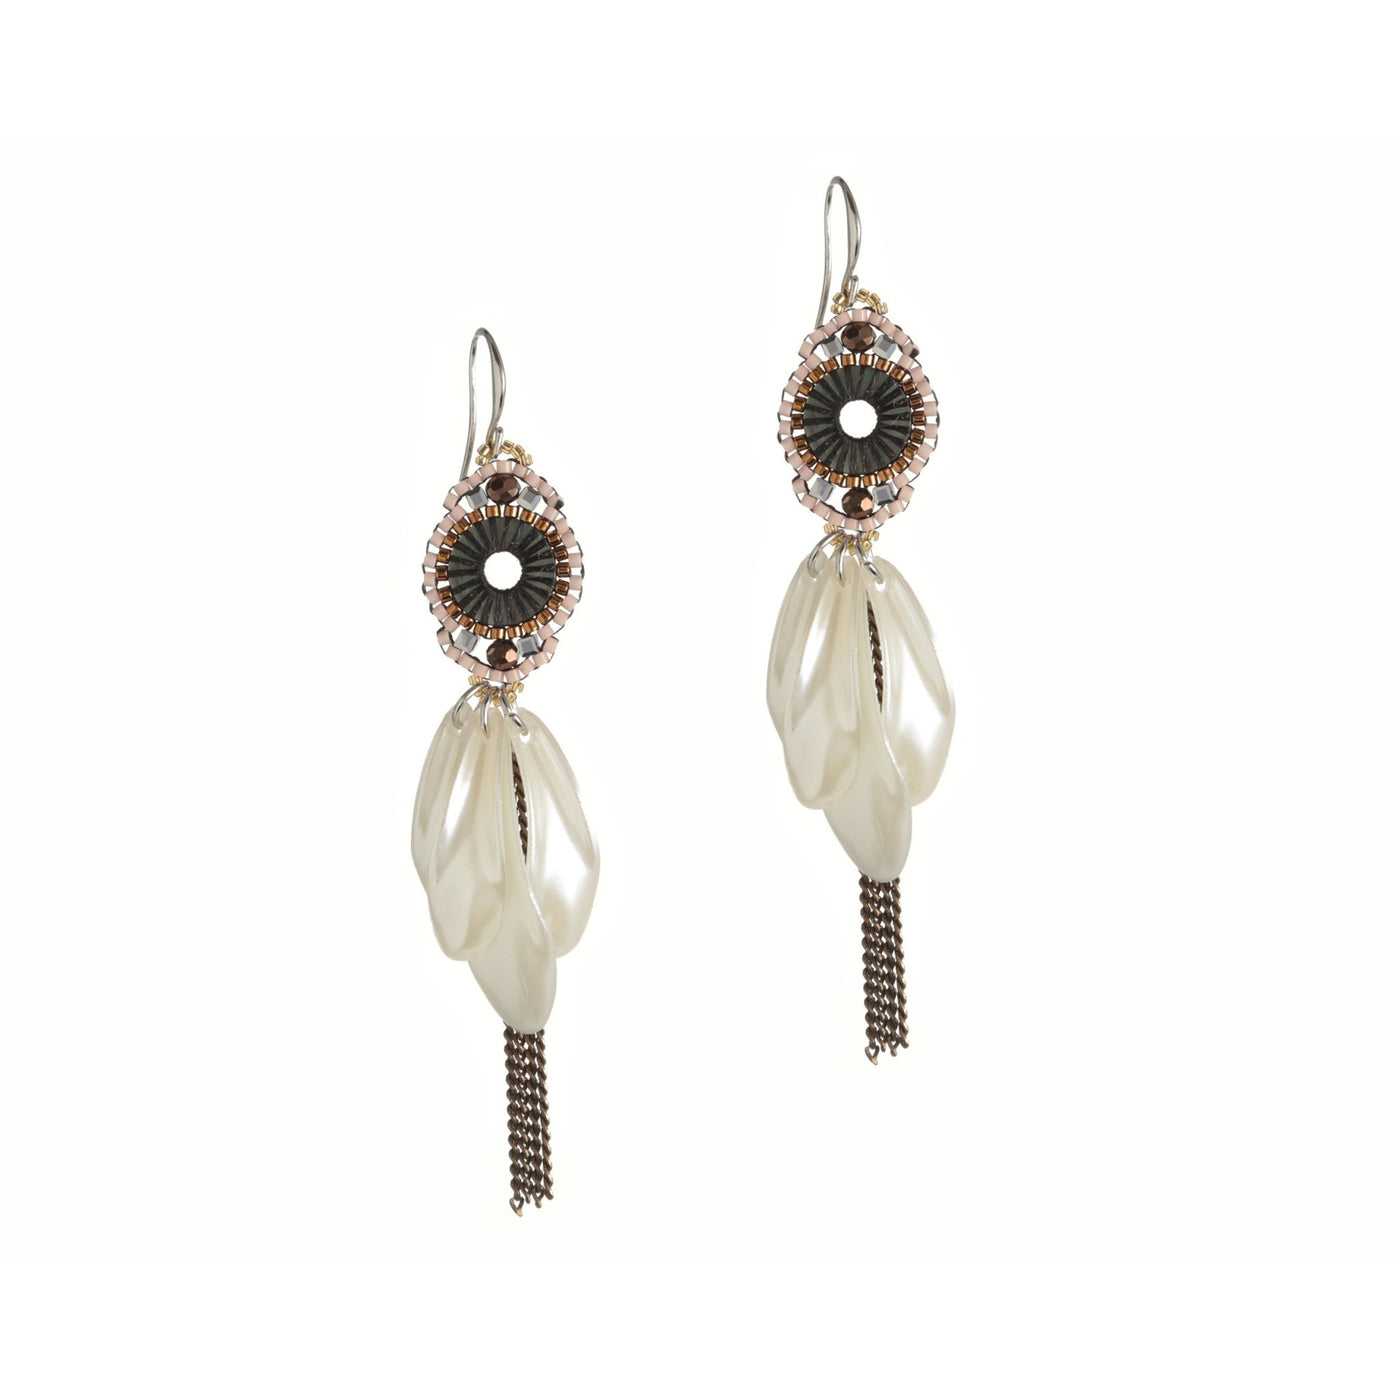 Boho Pearl Feather earrings with metallic bead work - Hey Sara